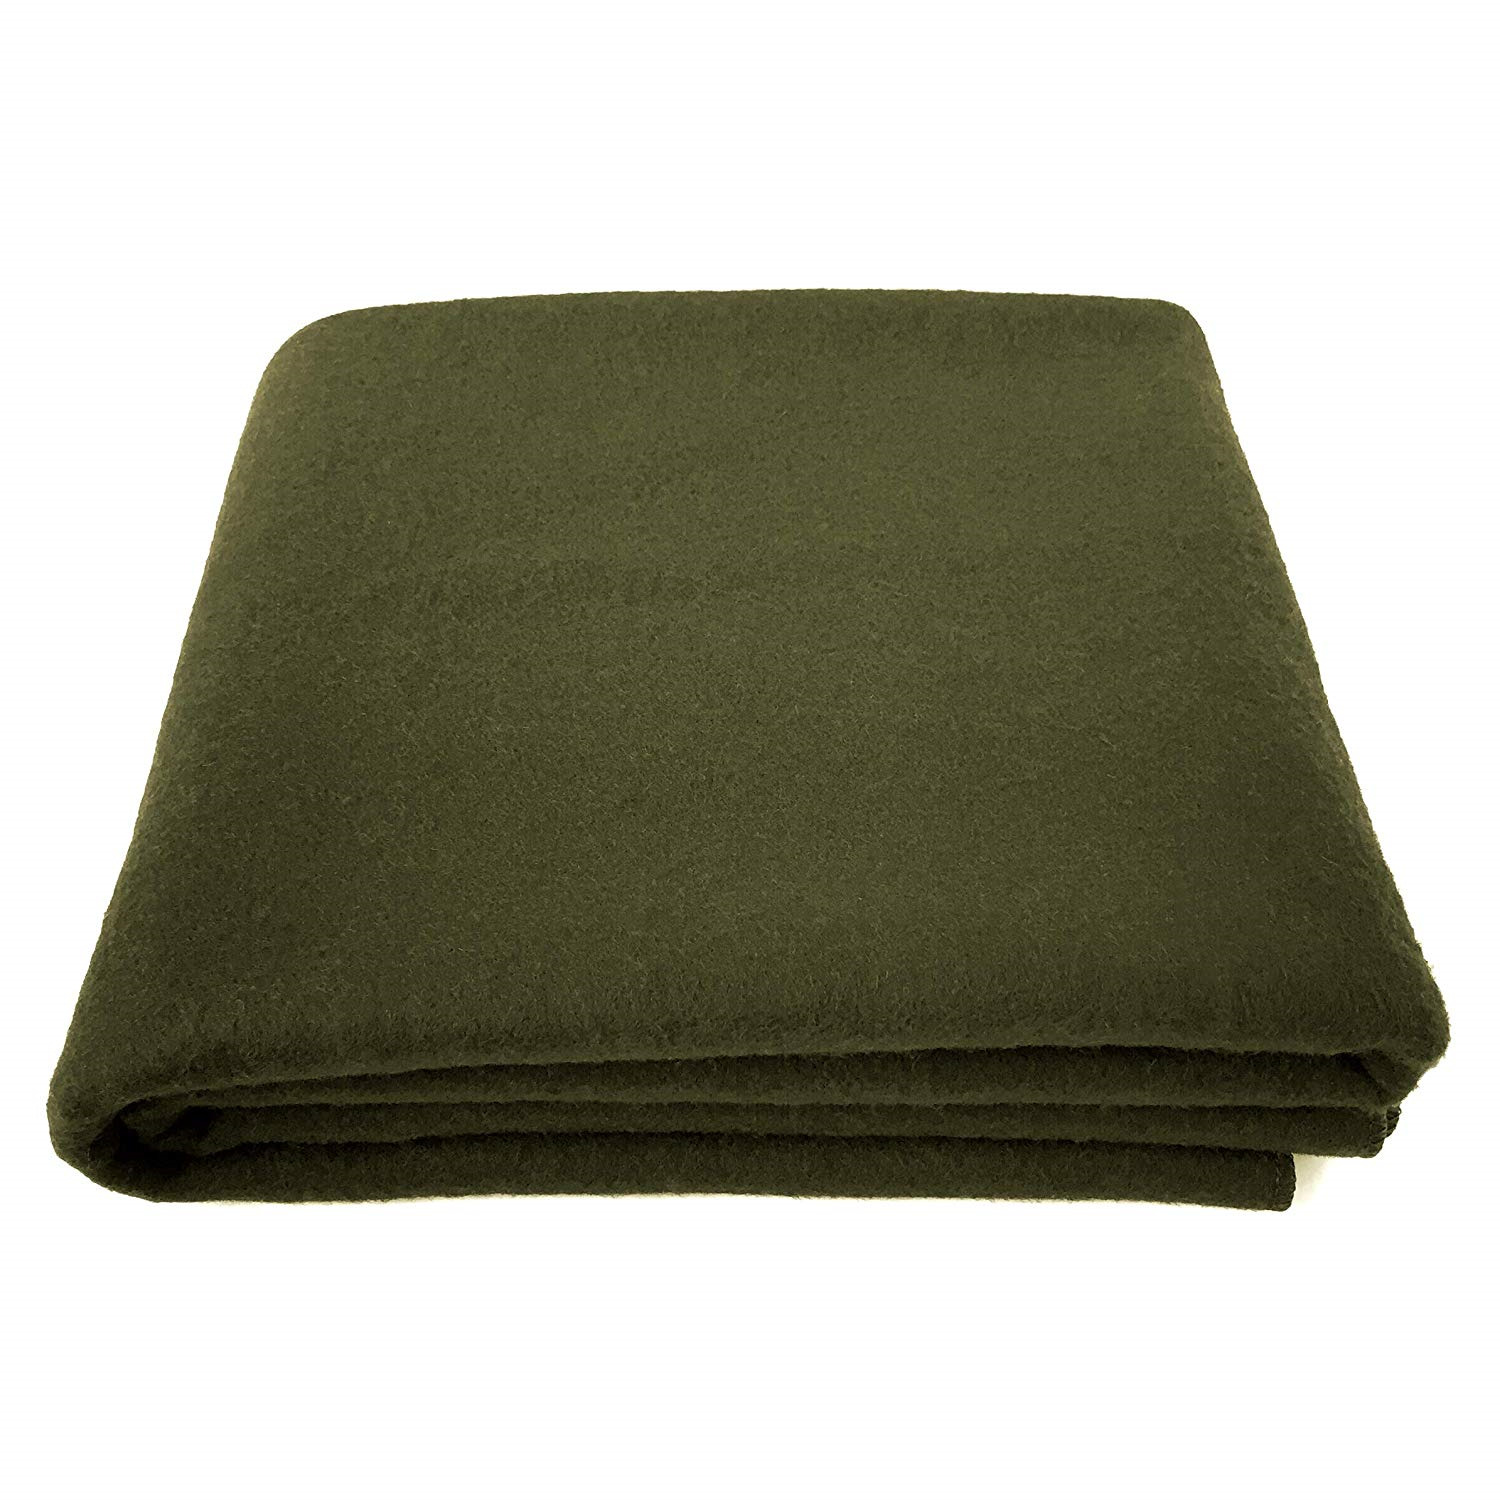 EKTOS Wool Blanket, Olive Green, Warm & Heavy 4.0 lbs, Large Washable 66\